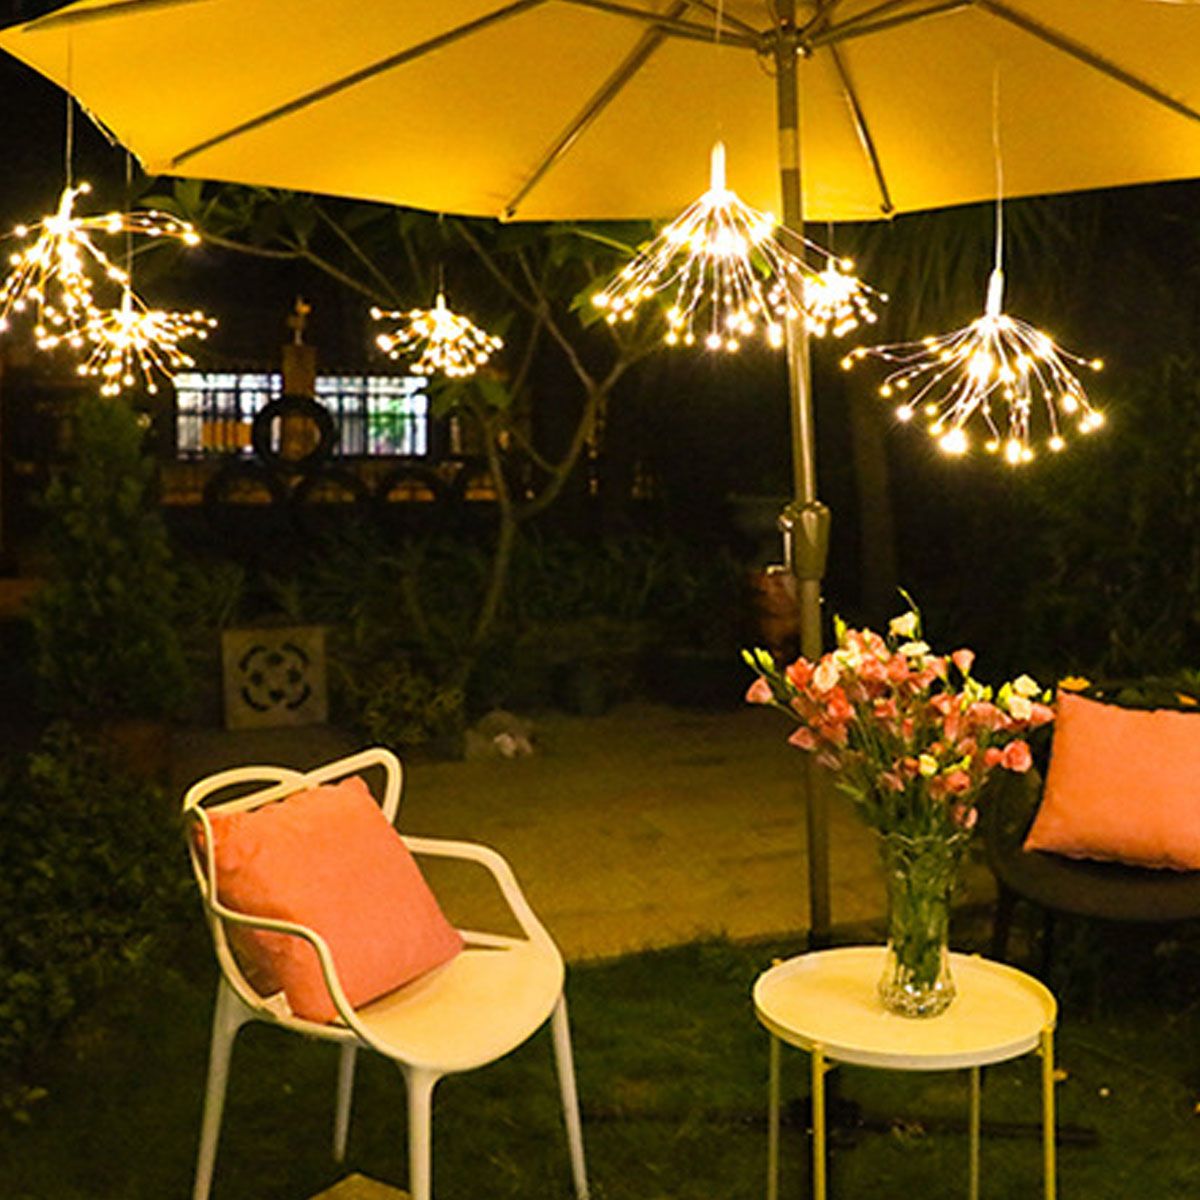 DIY-Starburst-Fairy-Solar-String-lights-for-Garden-Decoration-Bouquet-LED-String-Christmas-Festive-l-1722183